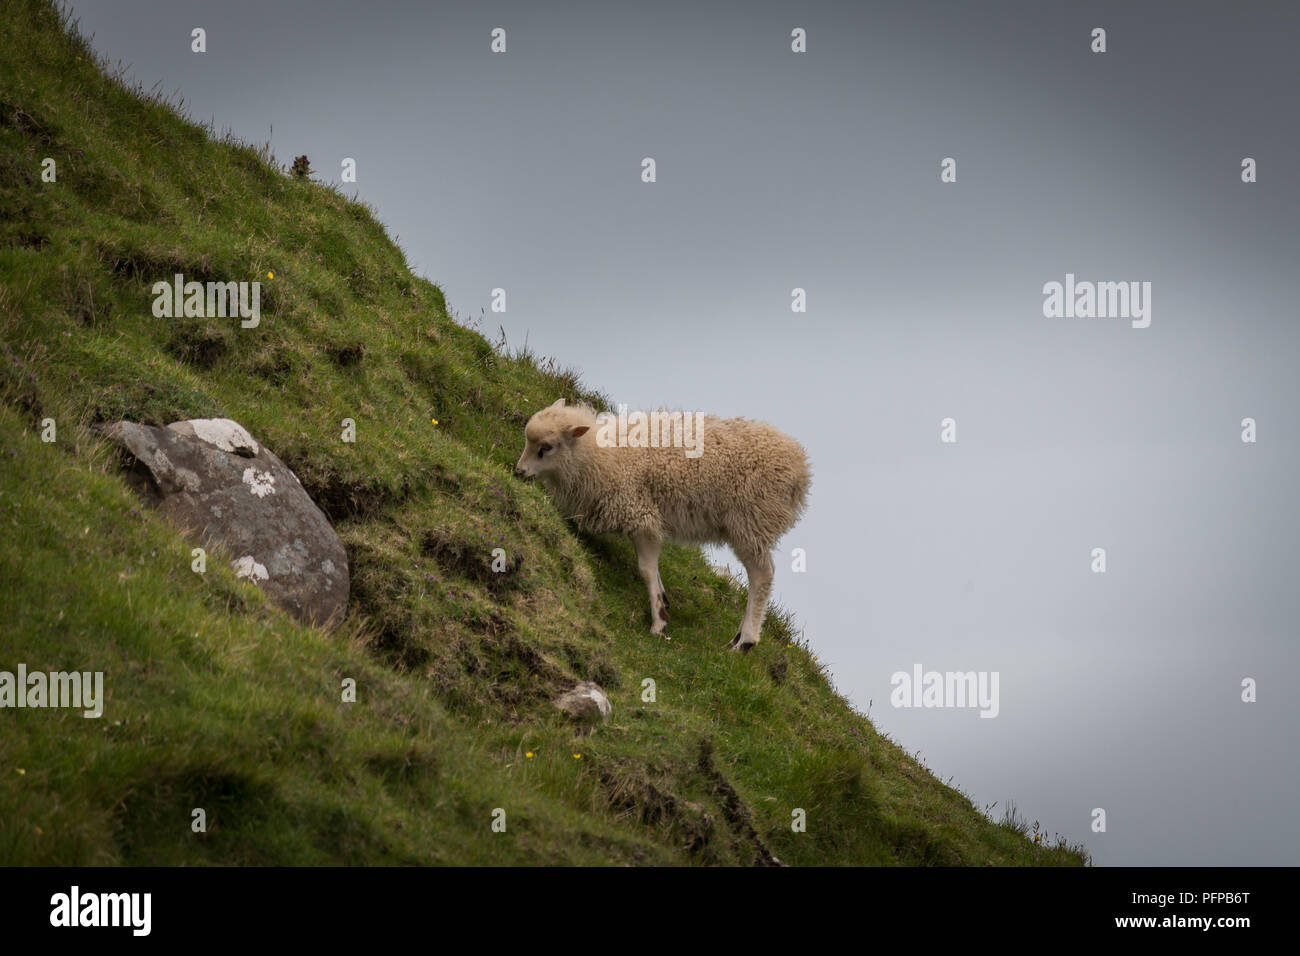 Lamb grazing on a steep grassy slope, Gásadalur, Vágar, Faroe Islands. Stock Photo